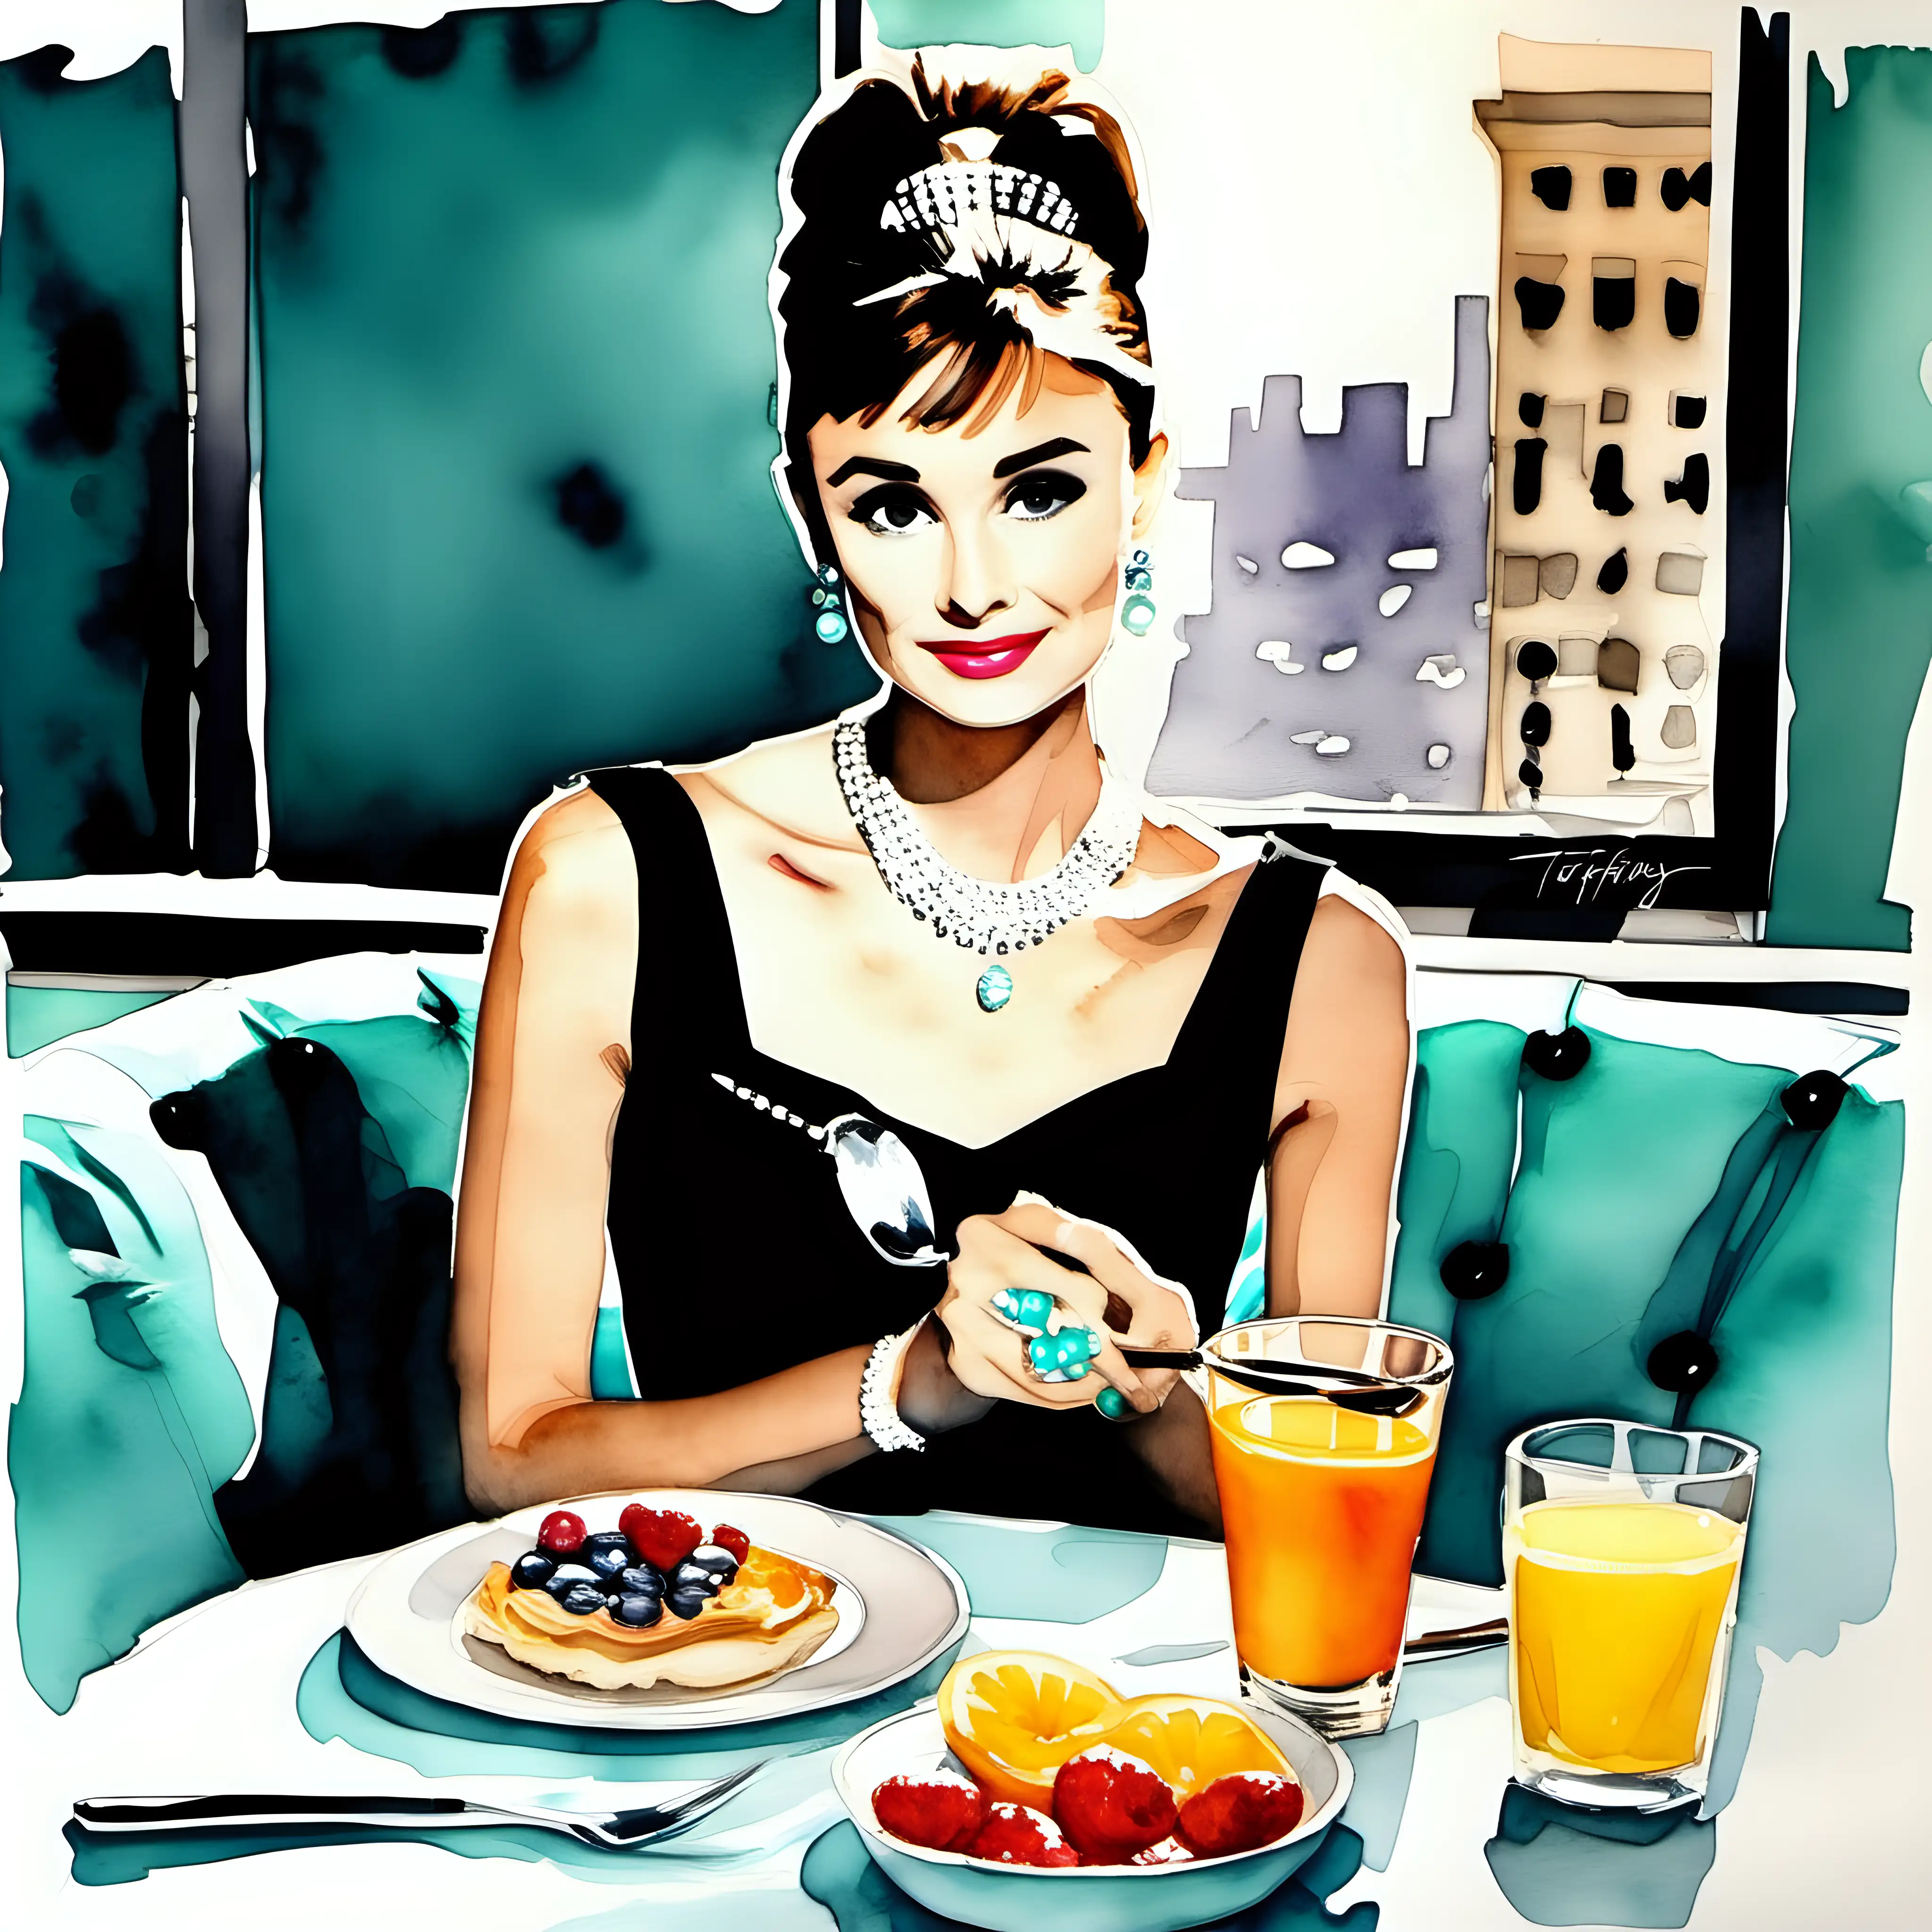 Breakfast at Tiffany in Watercolor